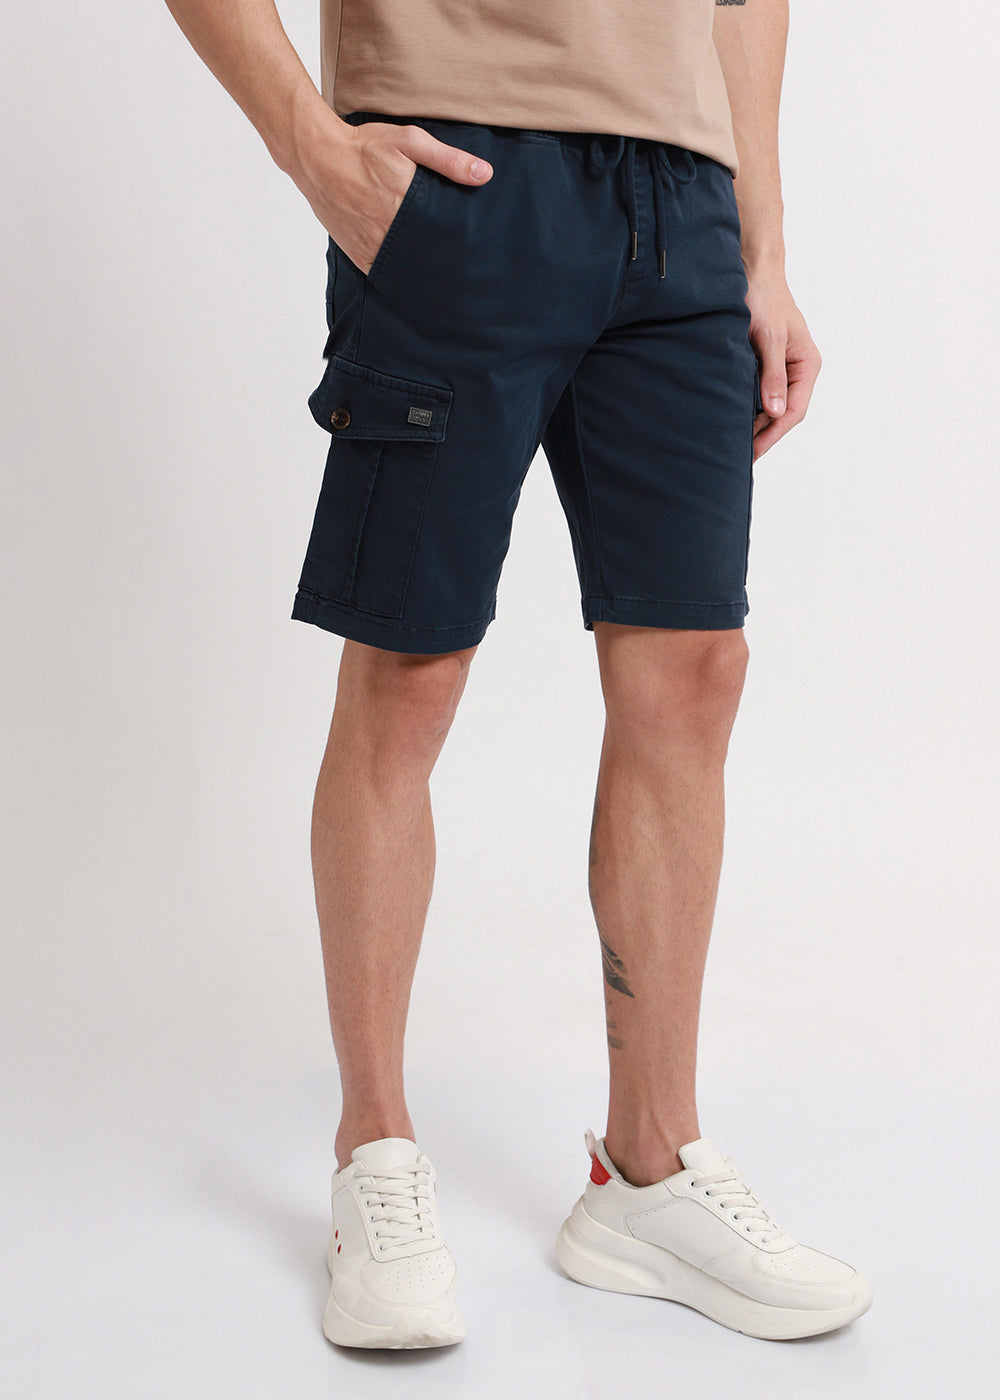 Buy Navy Blue Cotton Cargo Shorts